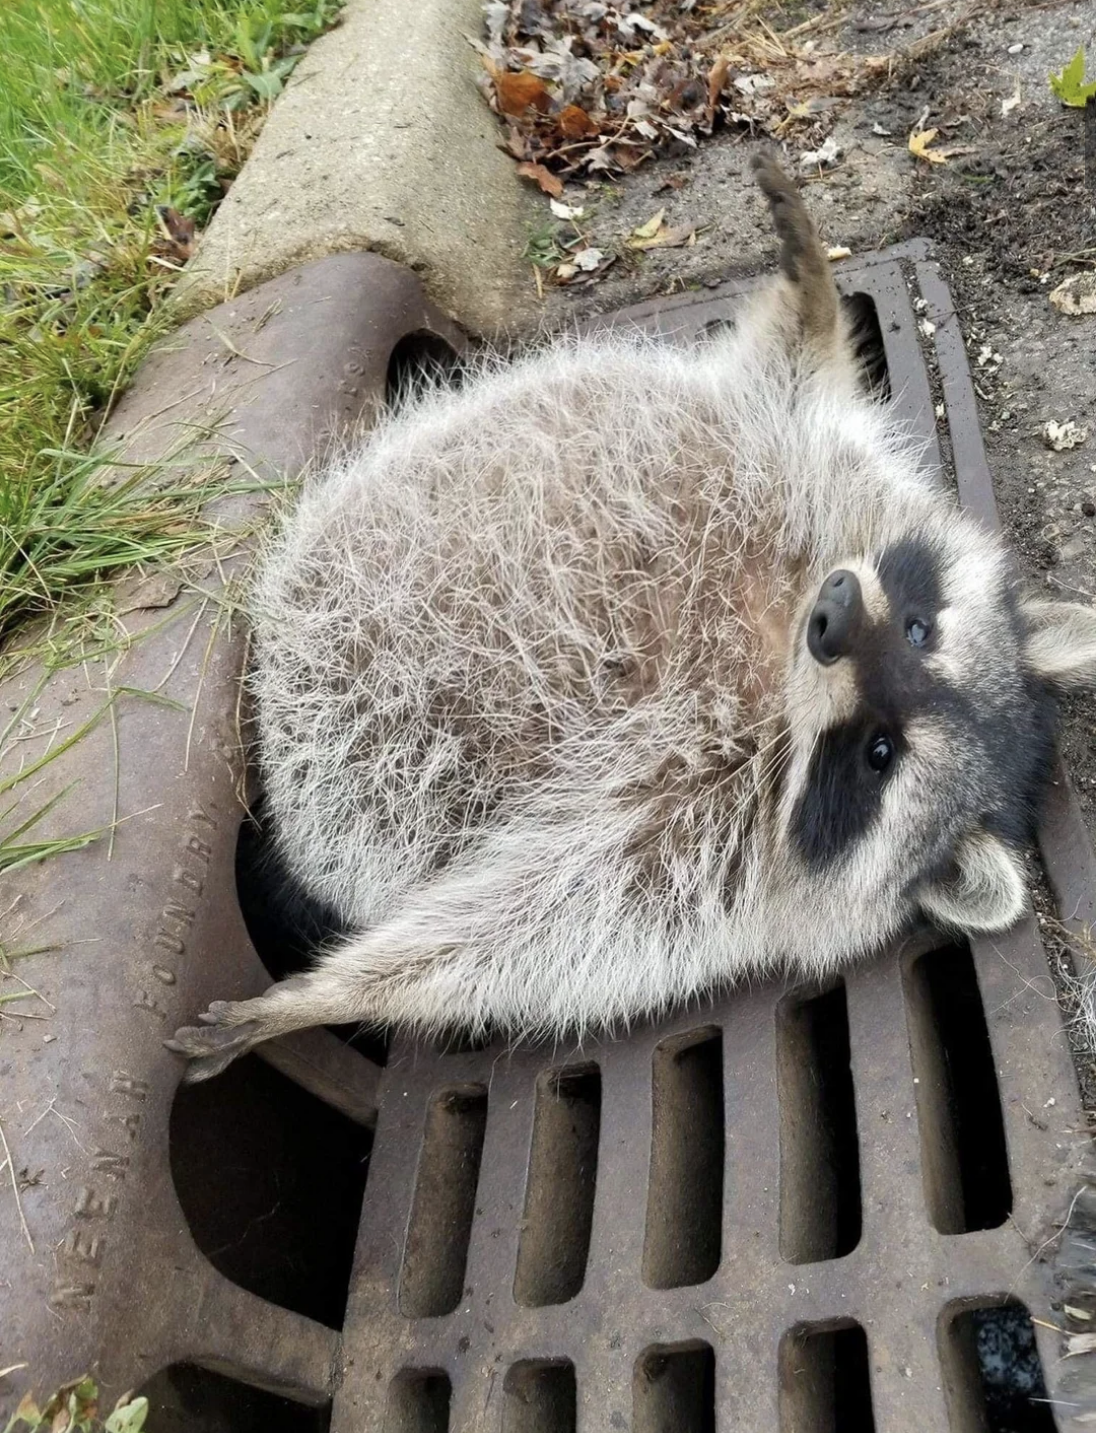 A  helpless raccoon stuck in the street drains.